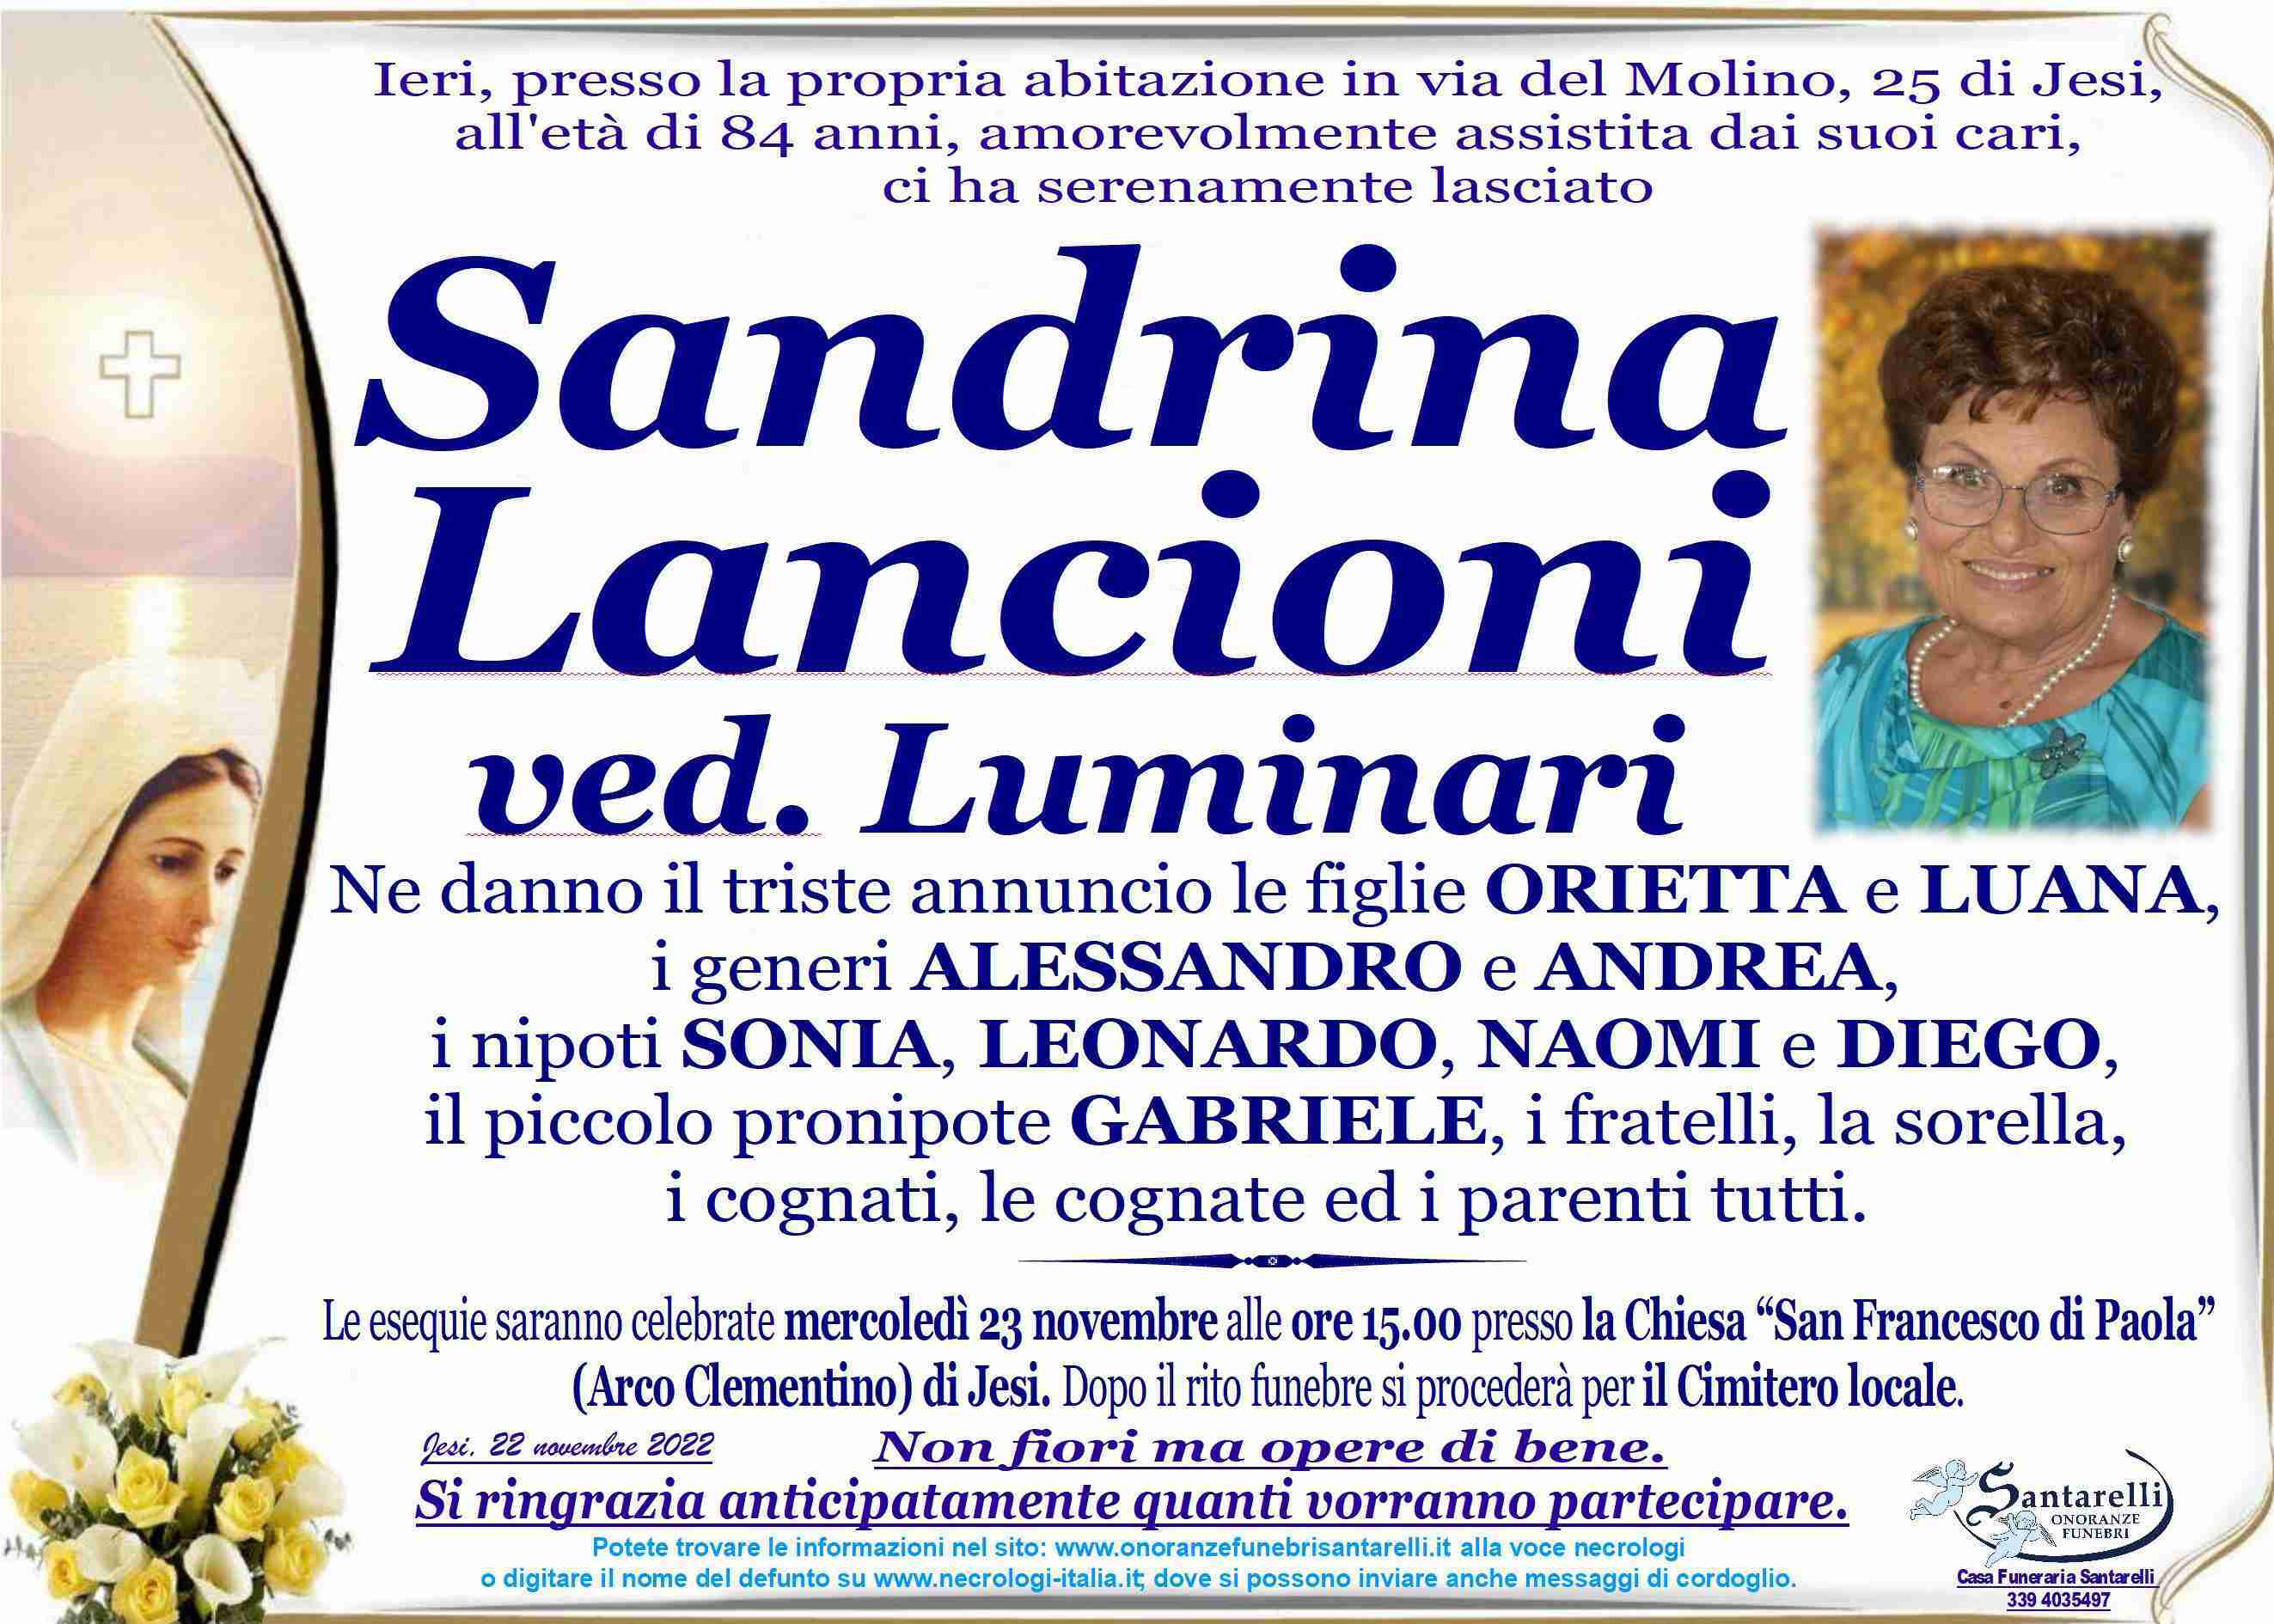 Sandrina Lancioni